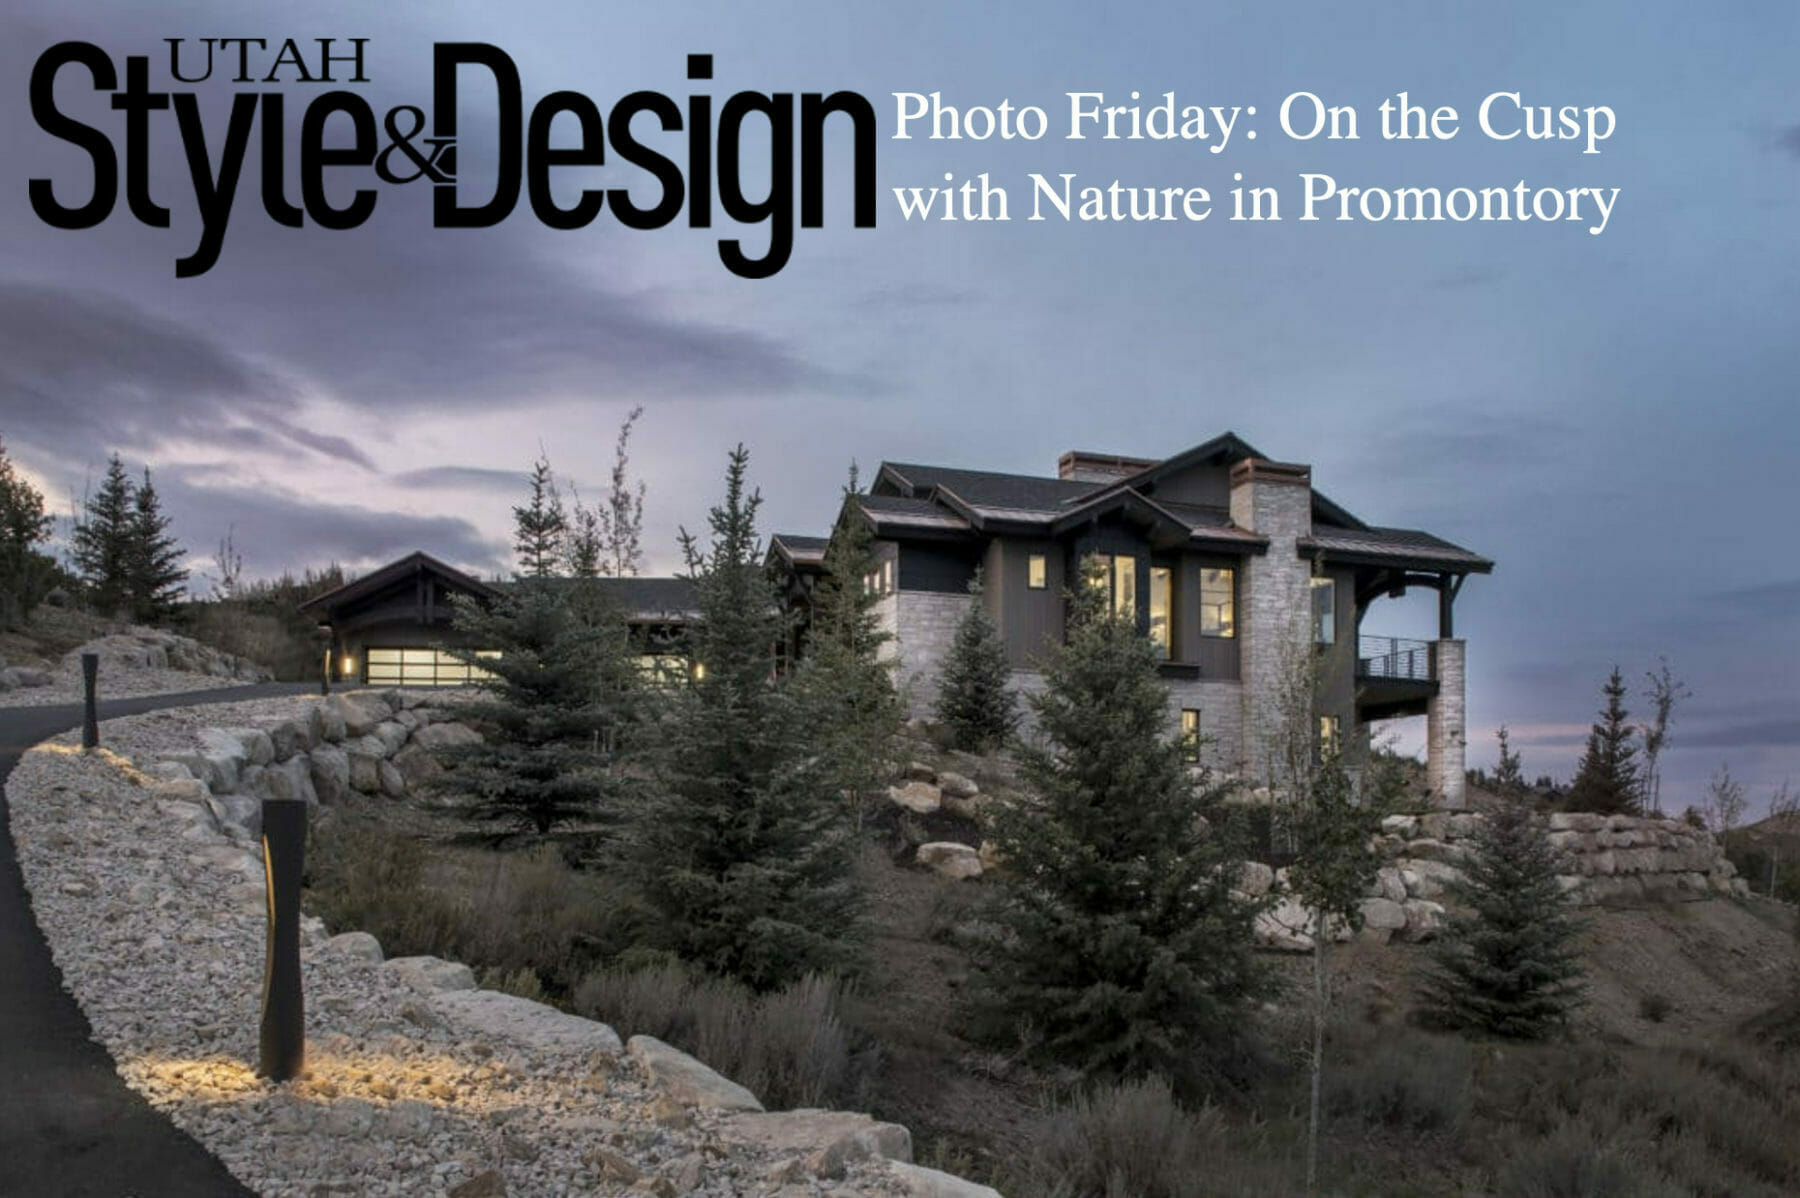 Utah Style & Design featured Utah Home Builder Highland Custom Homes